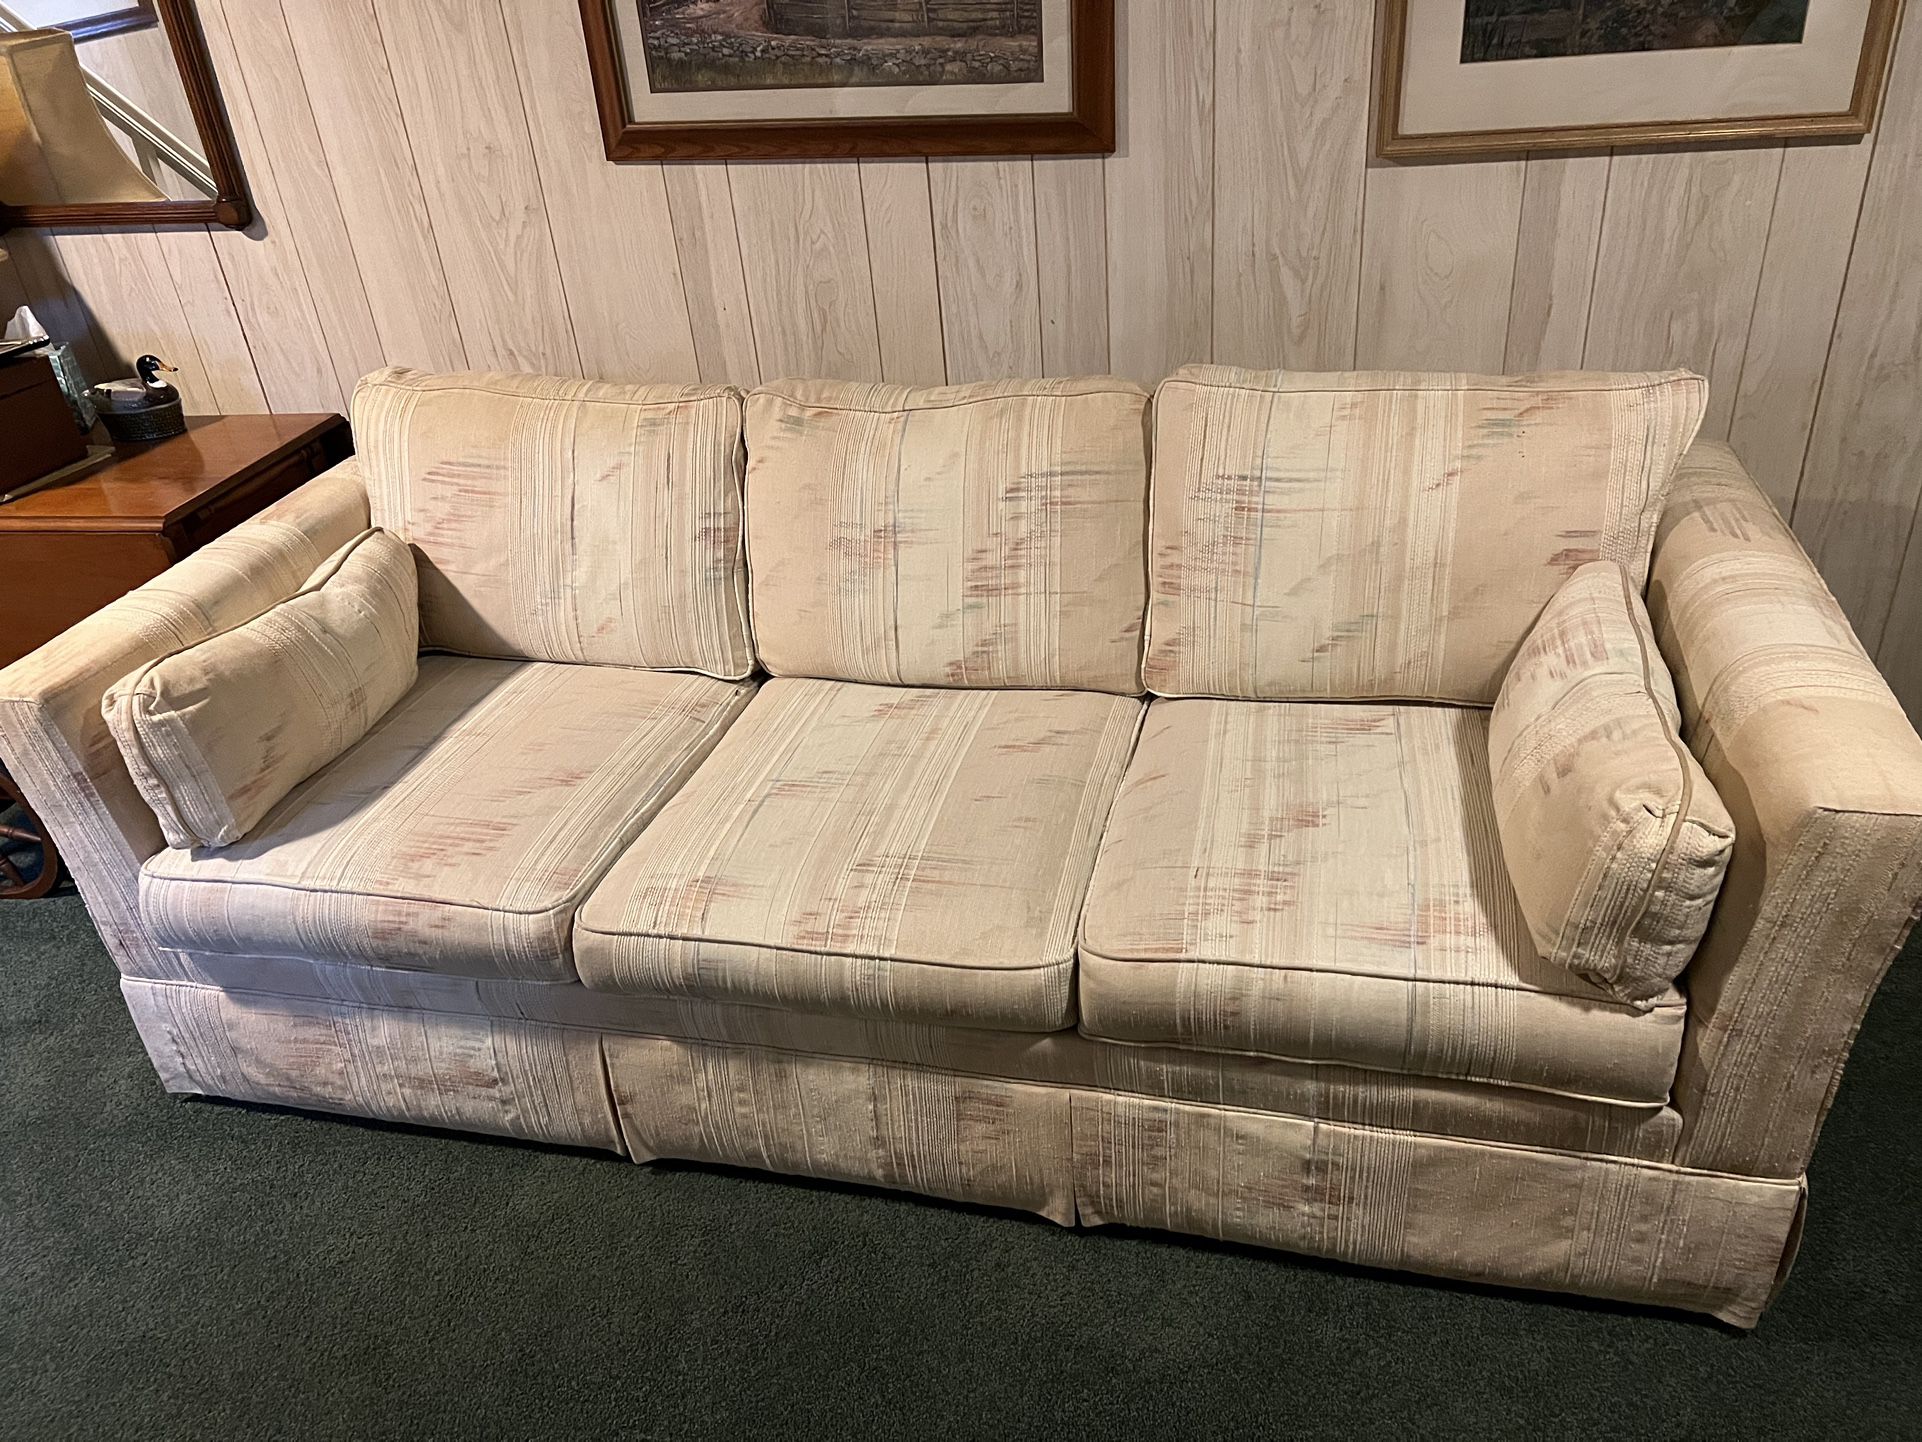 Sealy Queen-size Sleeper Sofa